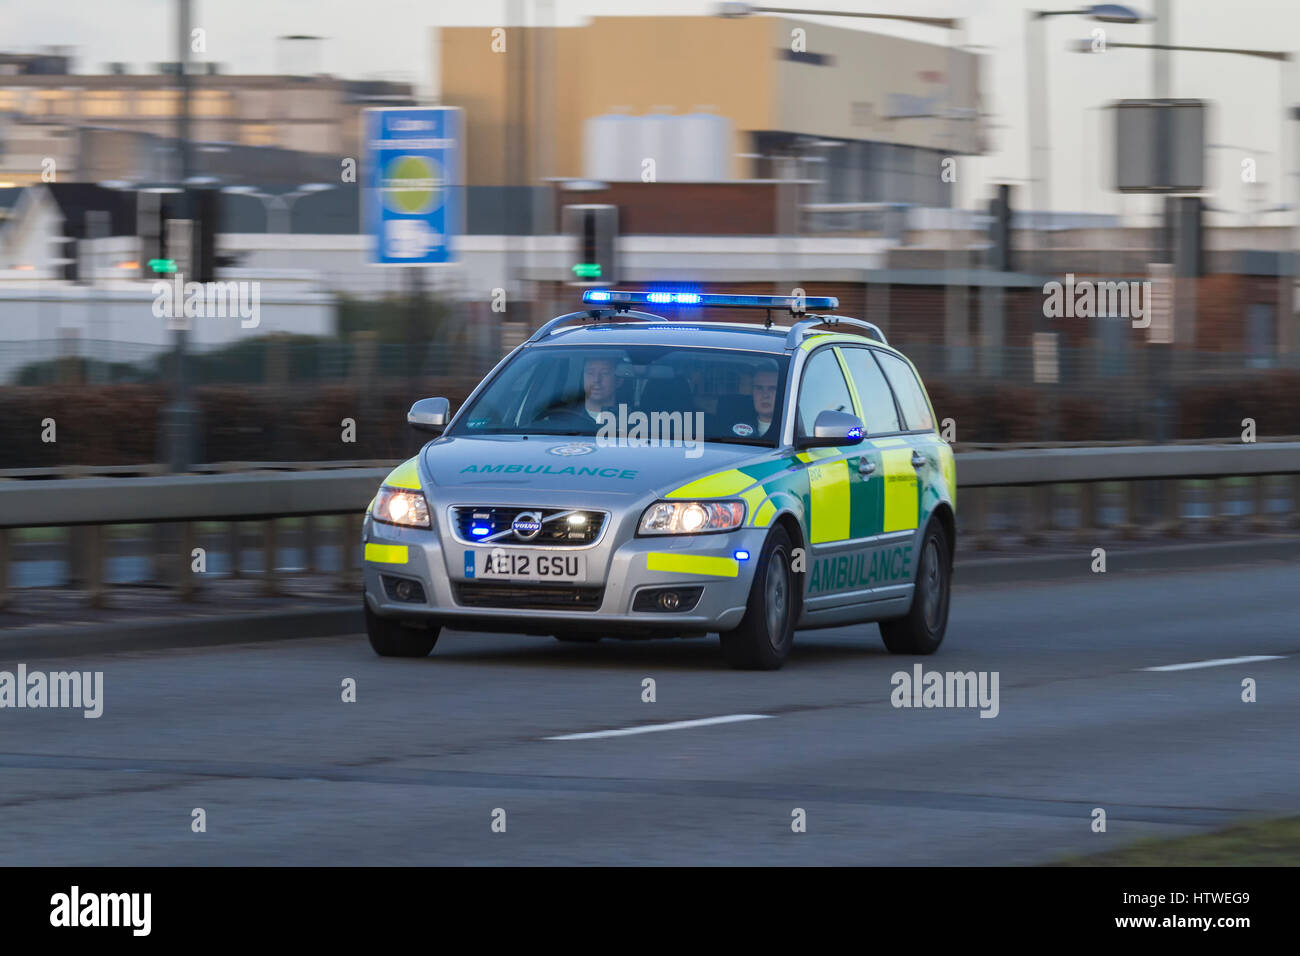 London Ambulance Service vehicle responding with blue lights Stock Photo